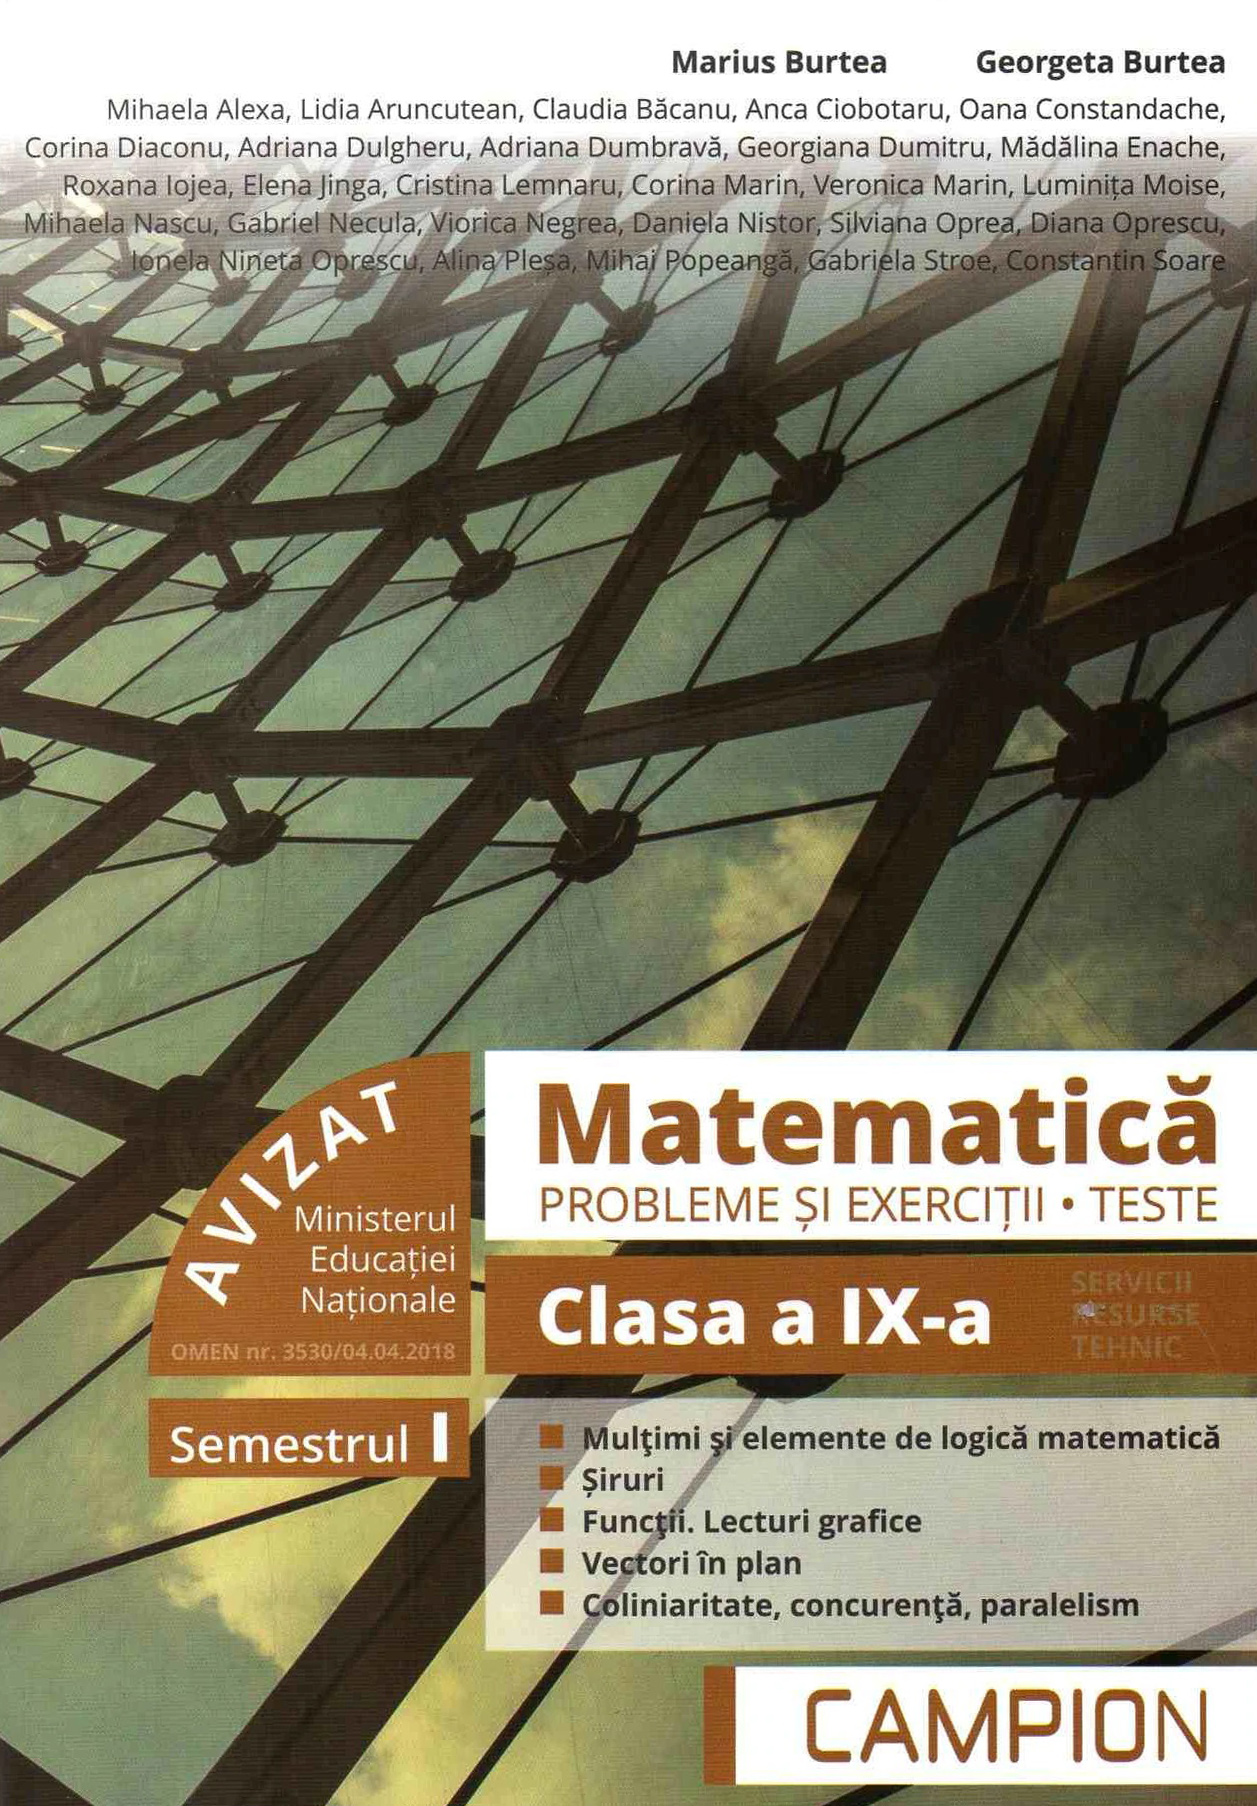 Matematica - Probleme si exercitii, teste - Clasa a IX-a, Semestrul I